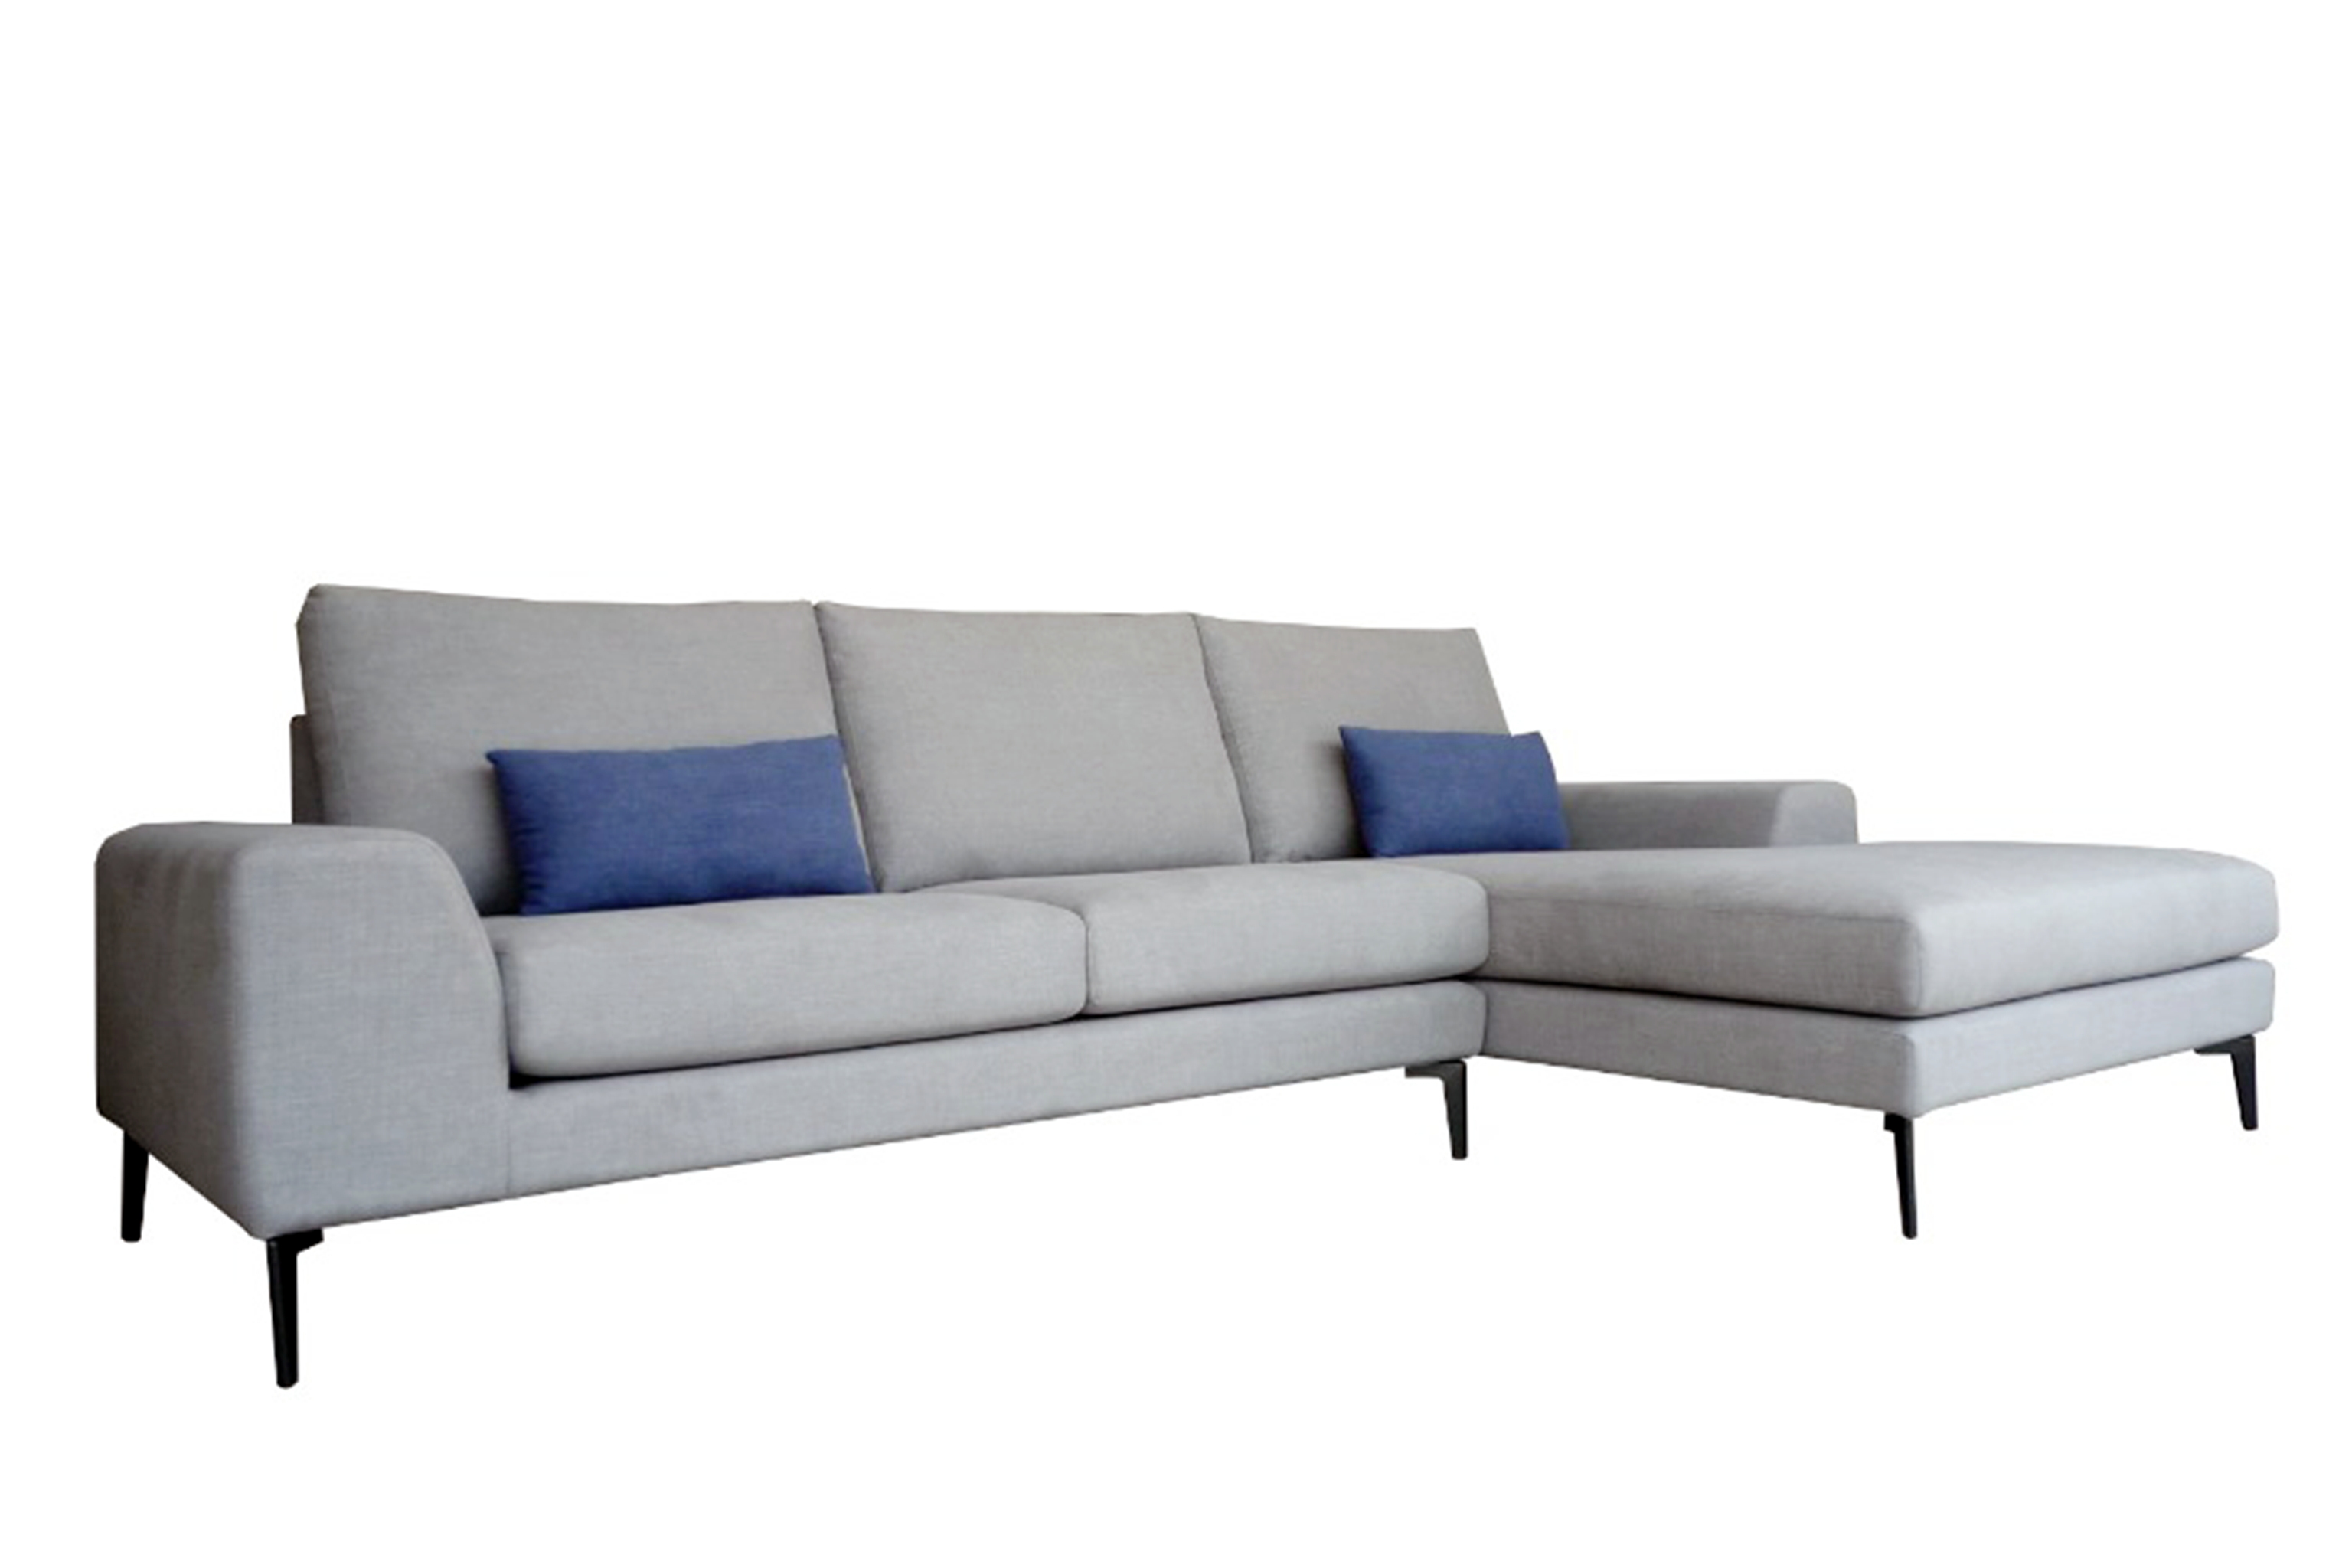 SAFFRON Sectional Sofa in Fabric by Castilla